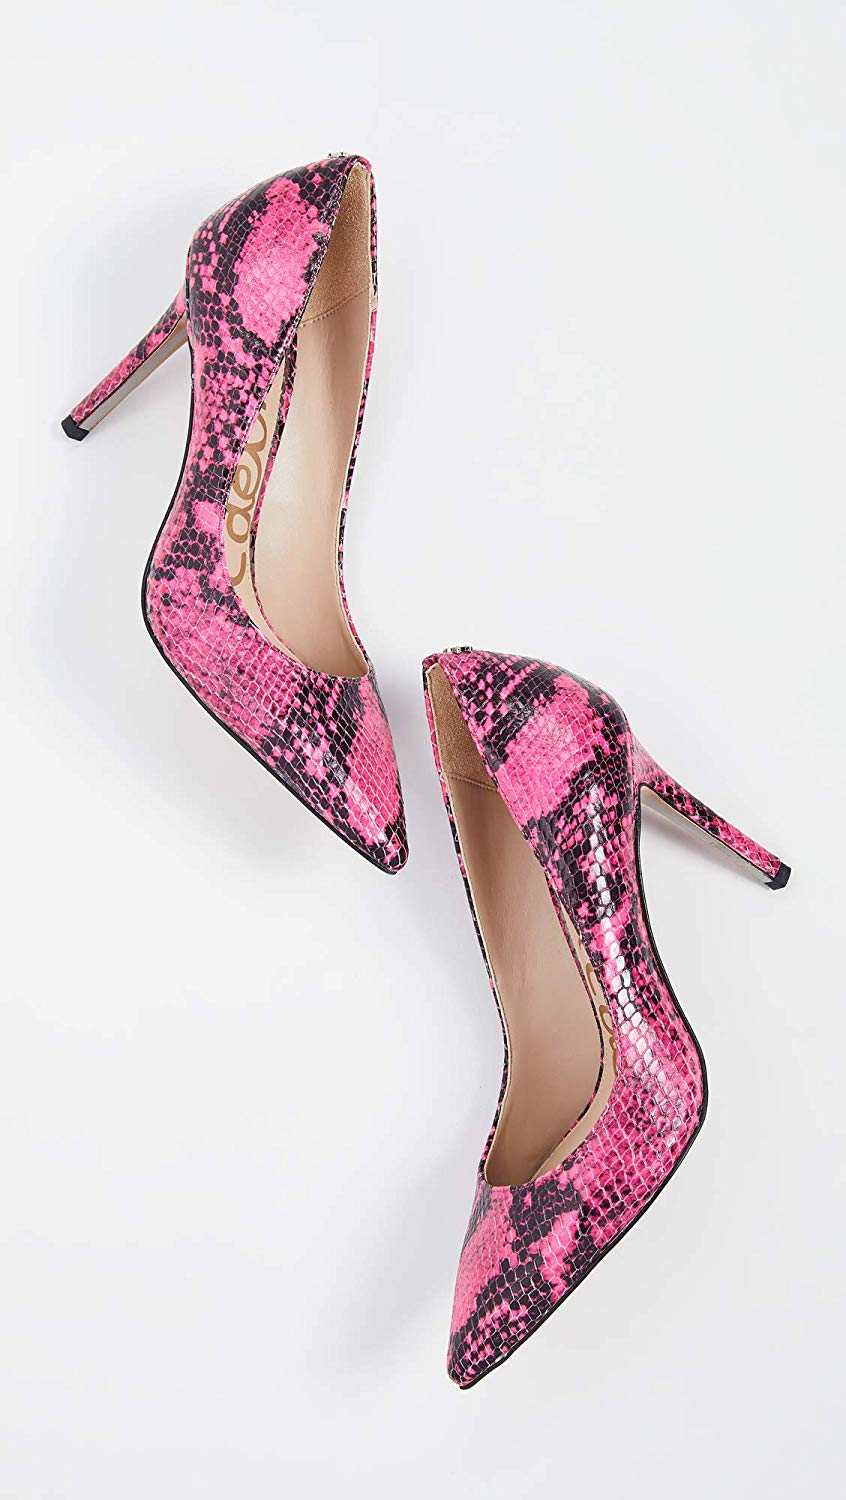 Sam Edelman Hazel Hot Pink Snake Print Pointed Stiletto Dress Shoes Pumps (9) - image 2 of 3